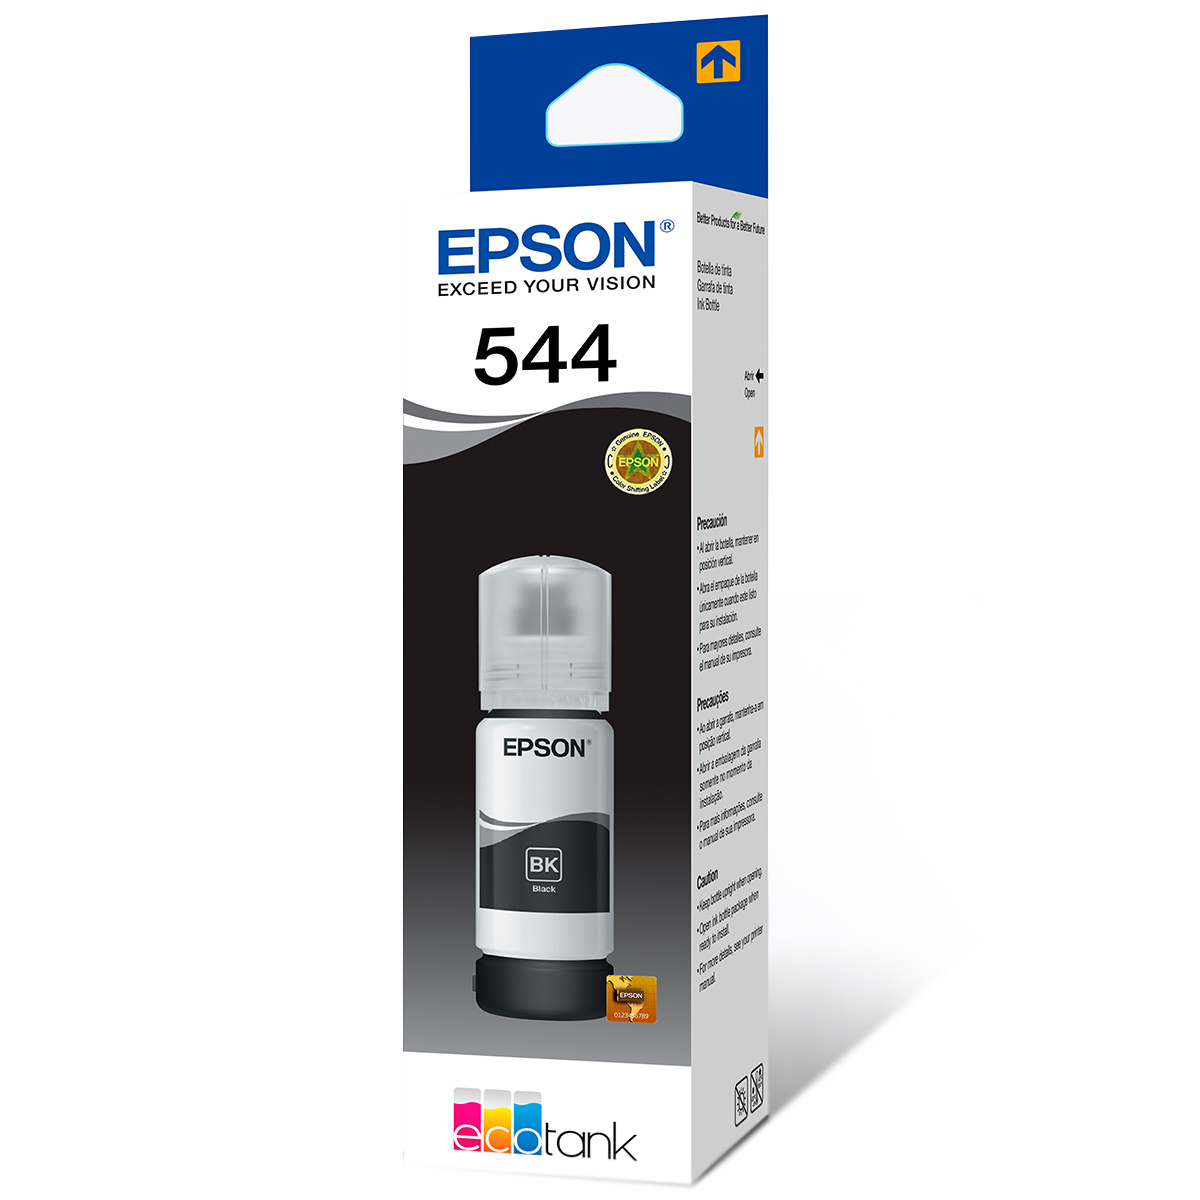 Botella de Tinta Epson T544 / T544120 AL / Negro / 4500 páginas / EcoTank